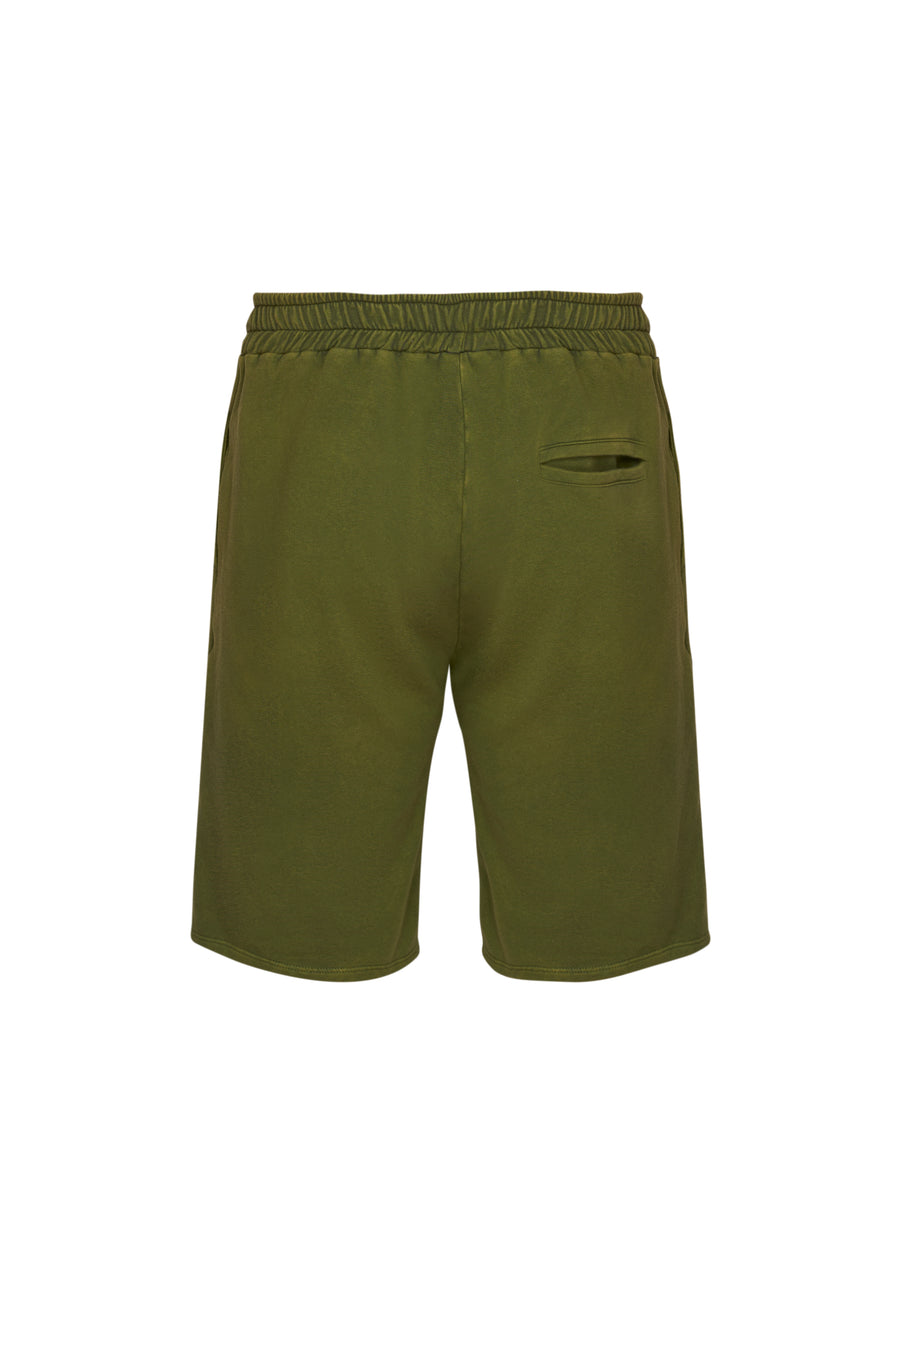 Tropical green Pants men